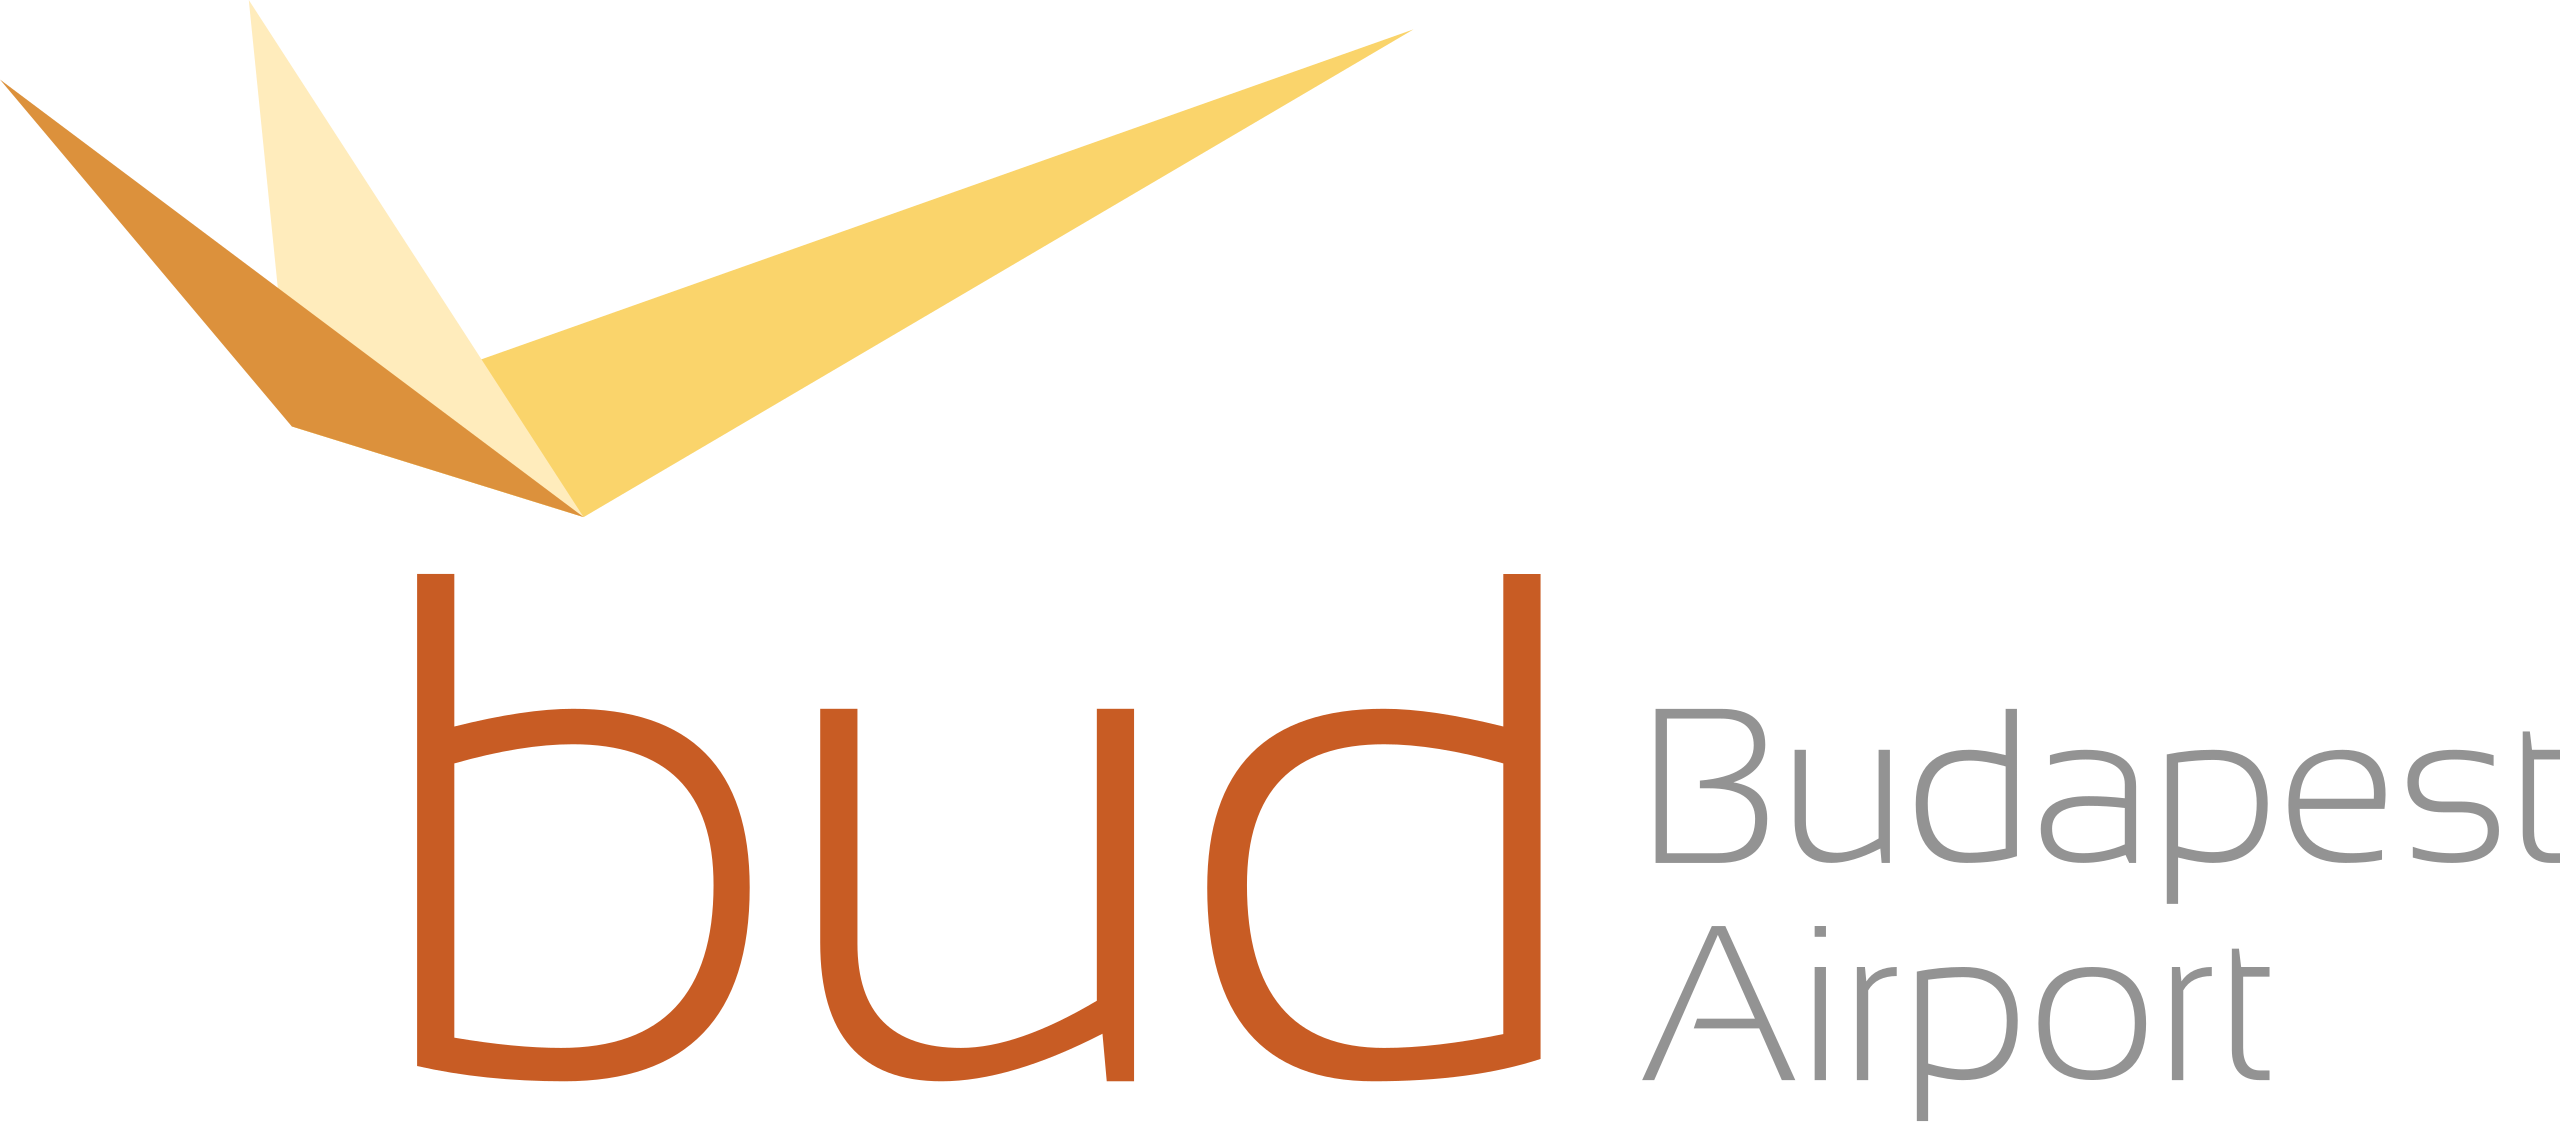 bud airport logo